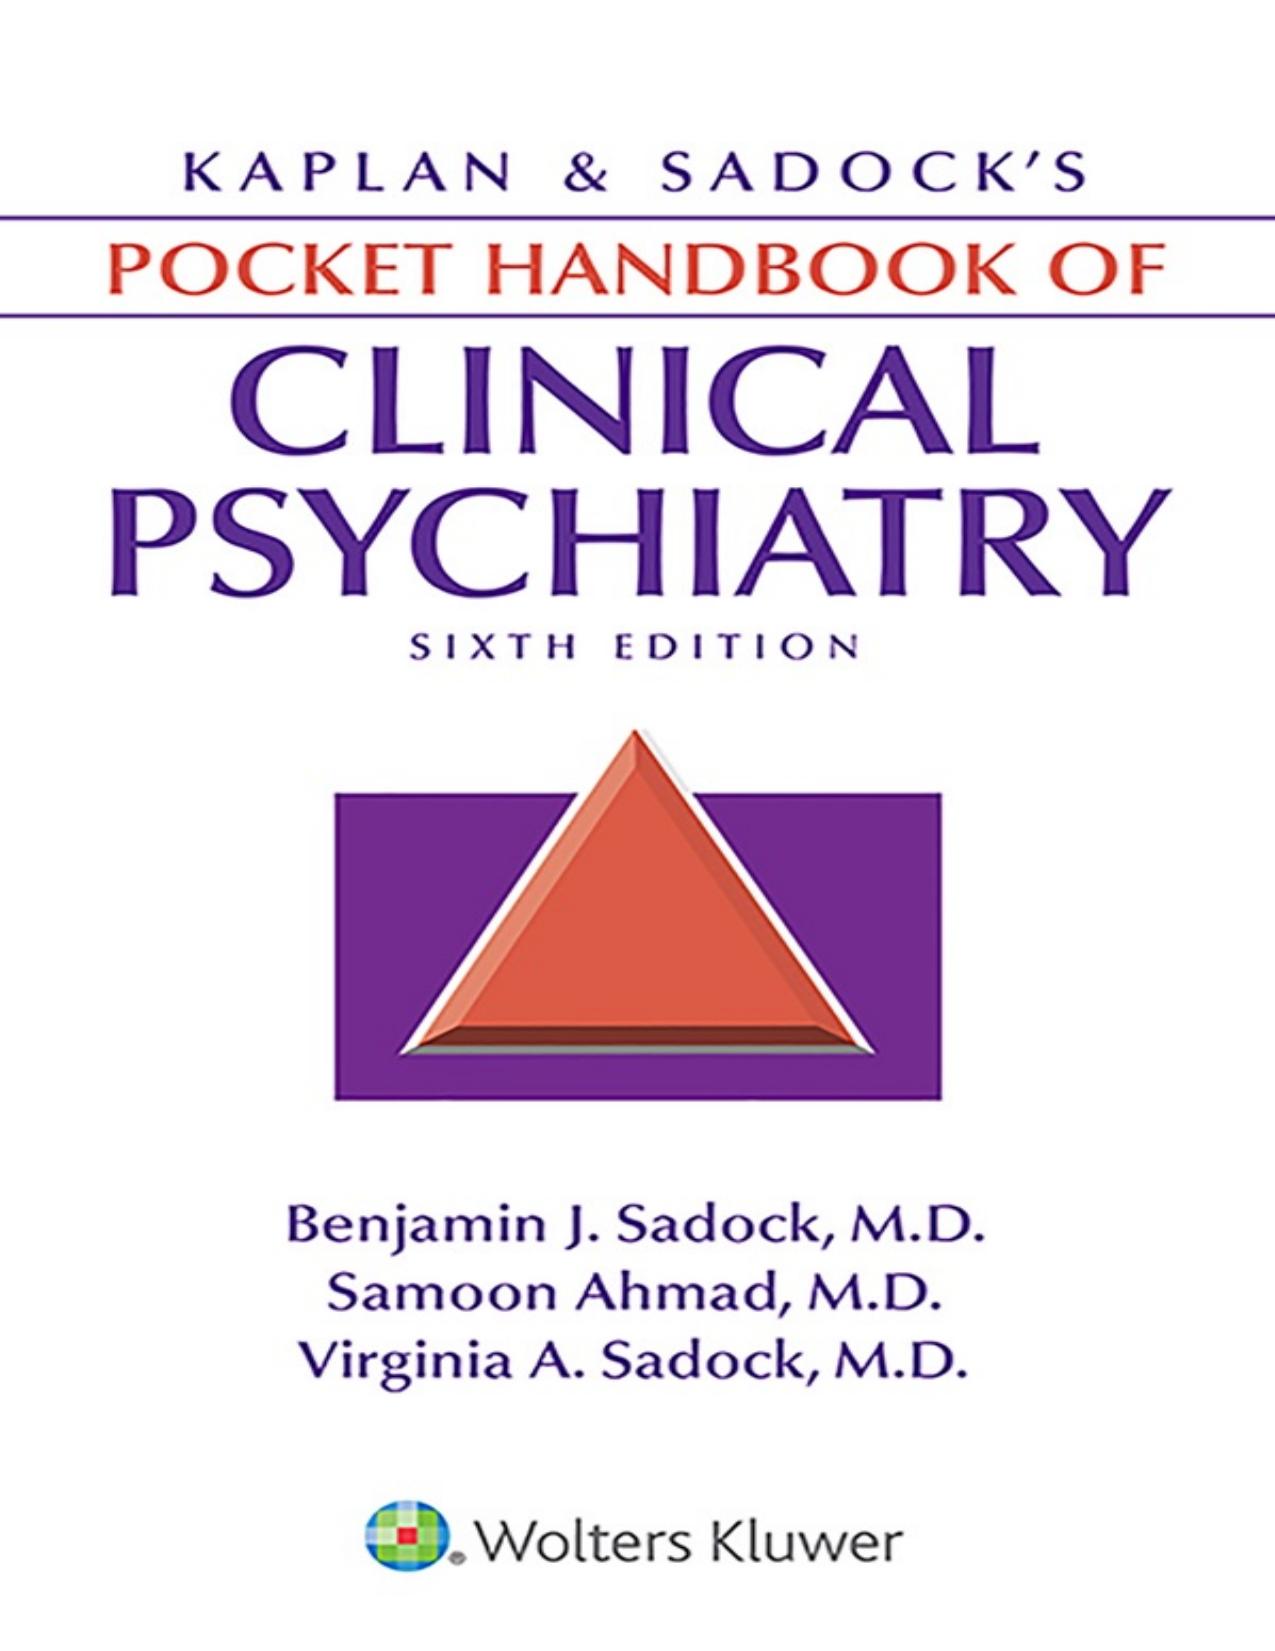 Kaplan \& Sadock’s Pocket Handbook of Clinical Psychiatry - PDFDrive.com